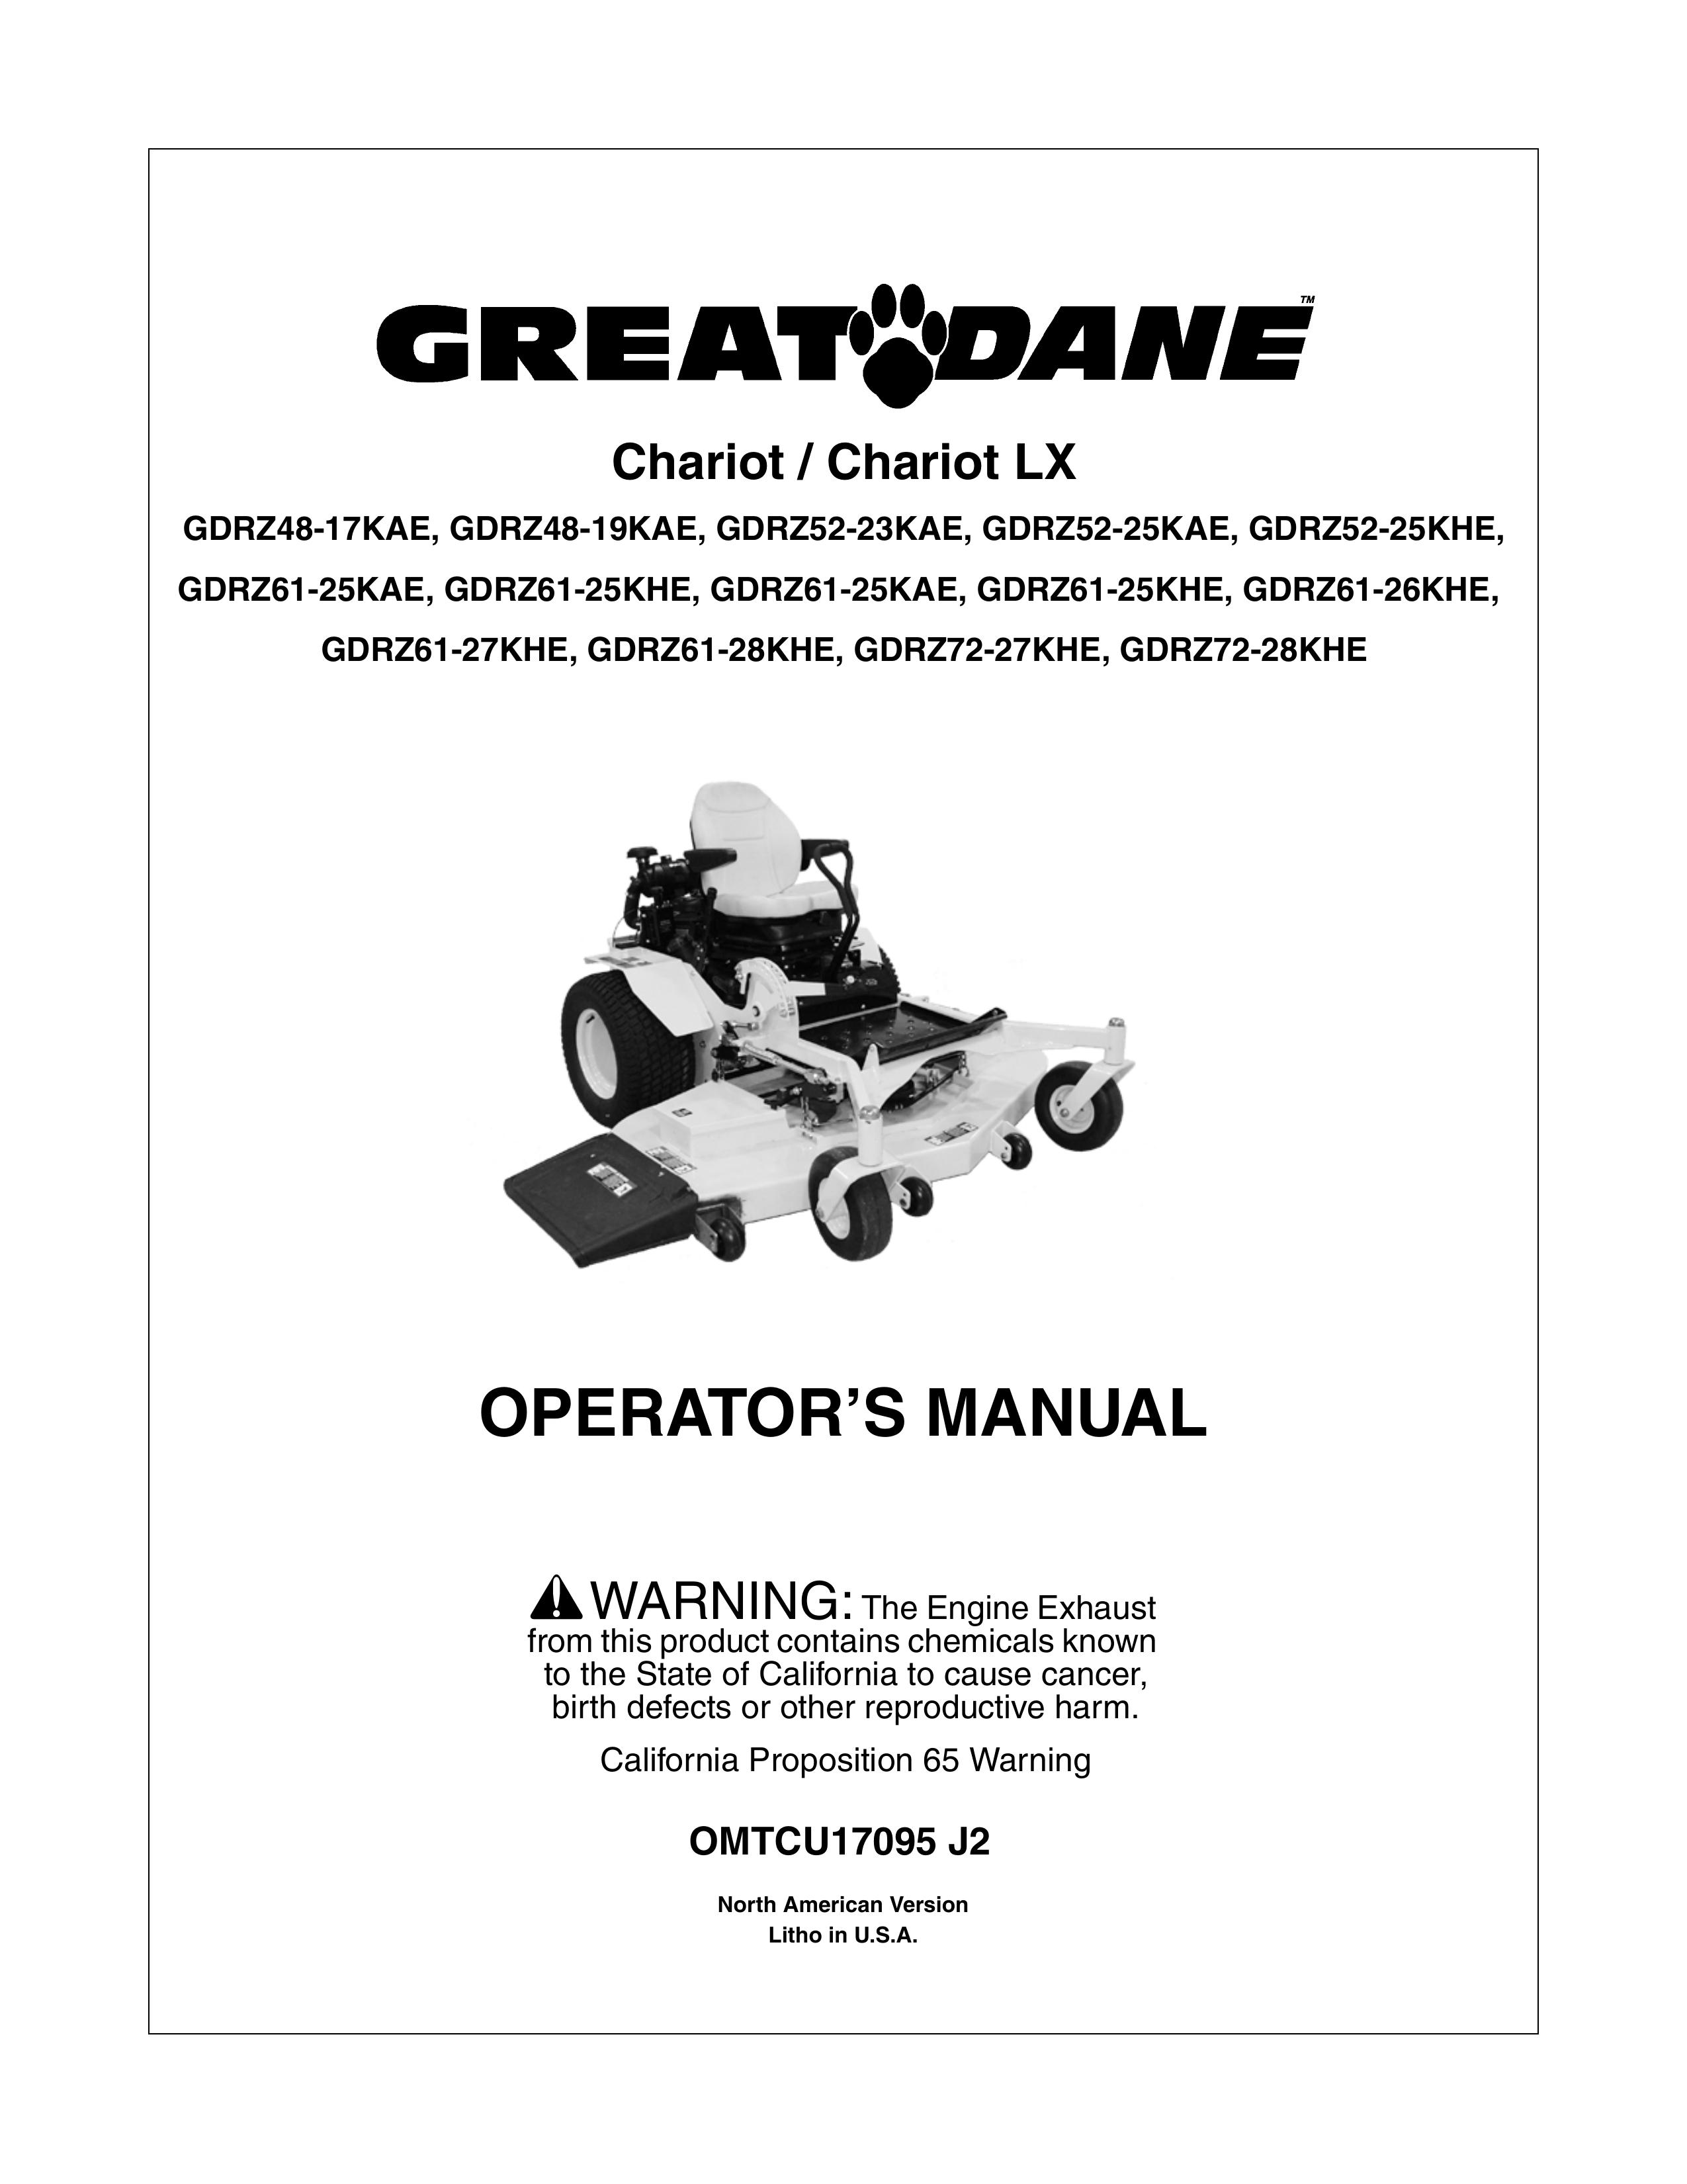 Great Dane GDRZ61-28KHE Lawn Mower User Manual